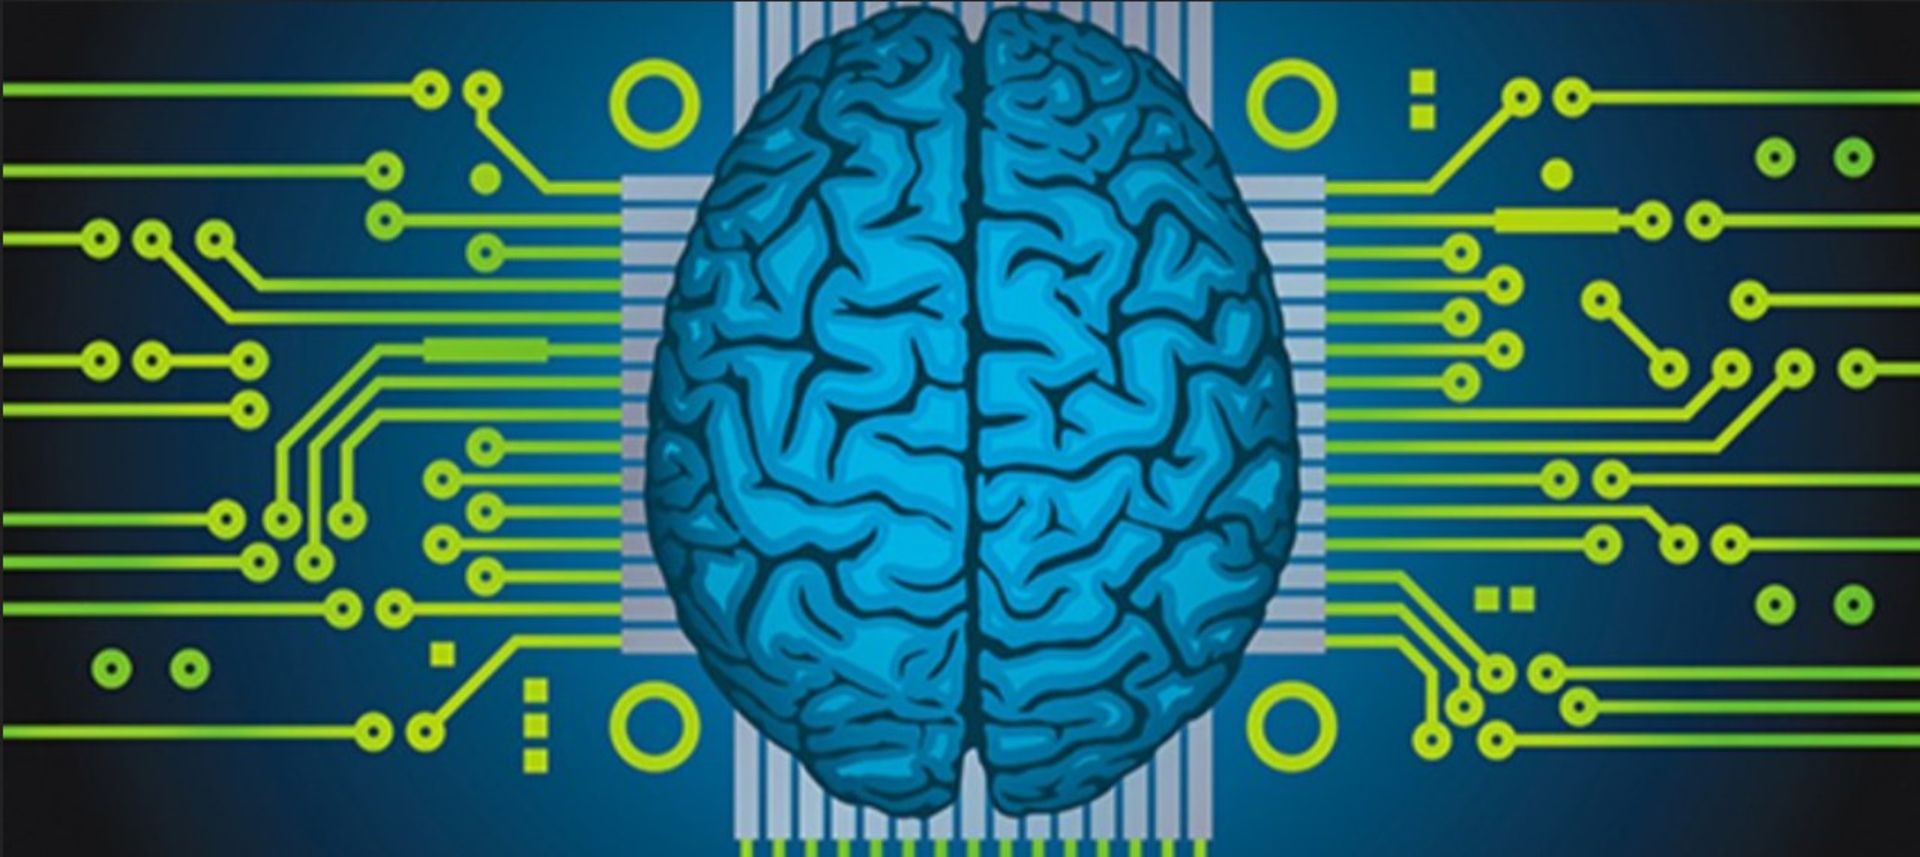 مغز انسان و کامپیوتر